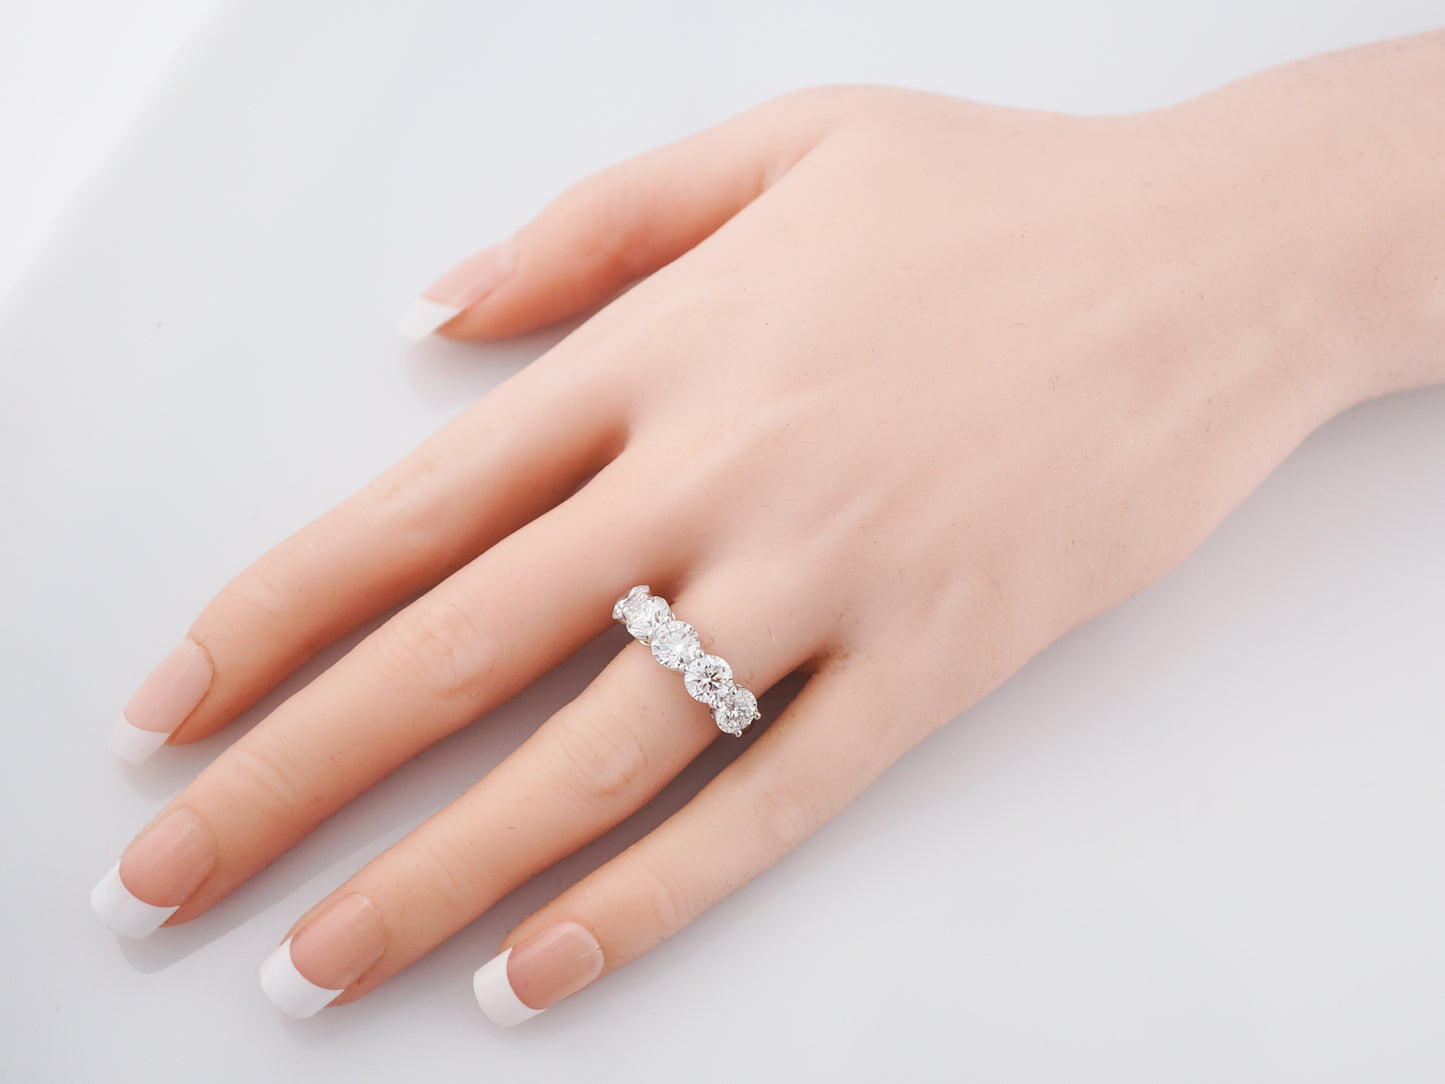 Right Hand Ring Modern 3.54 GIA Round Brilliant Cut Diamond in 18K White Gold